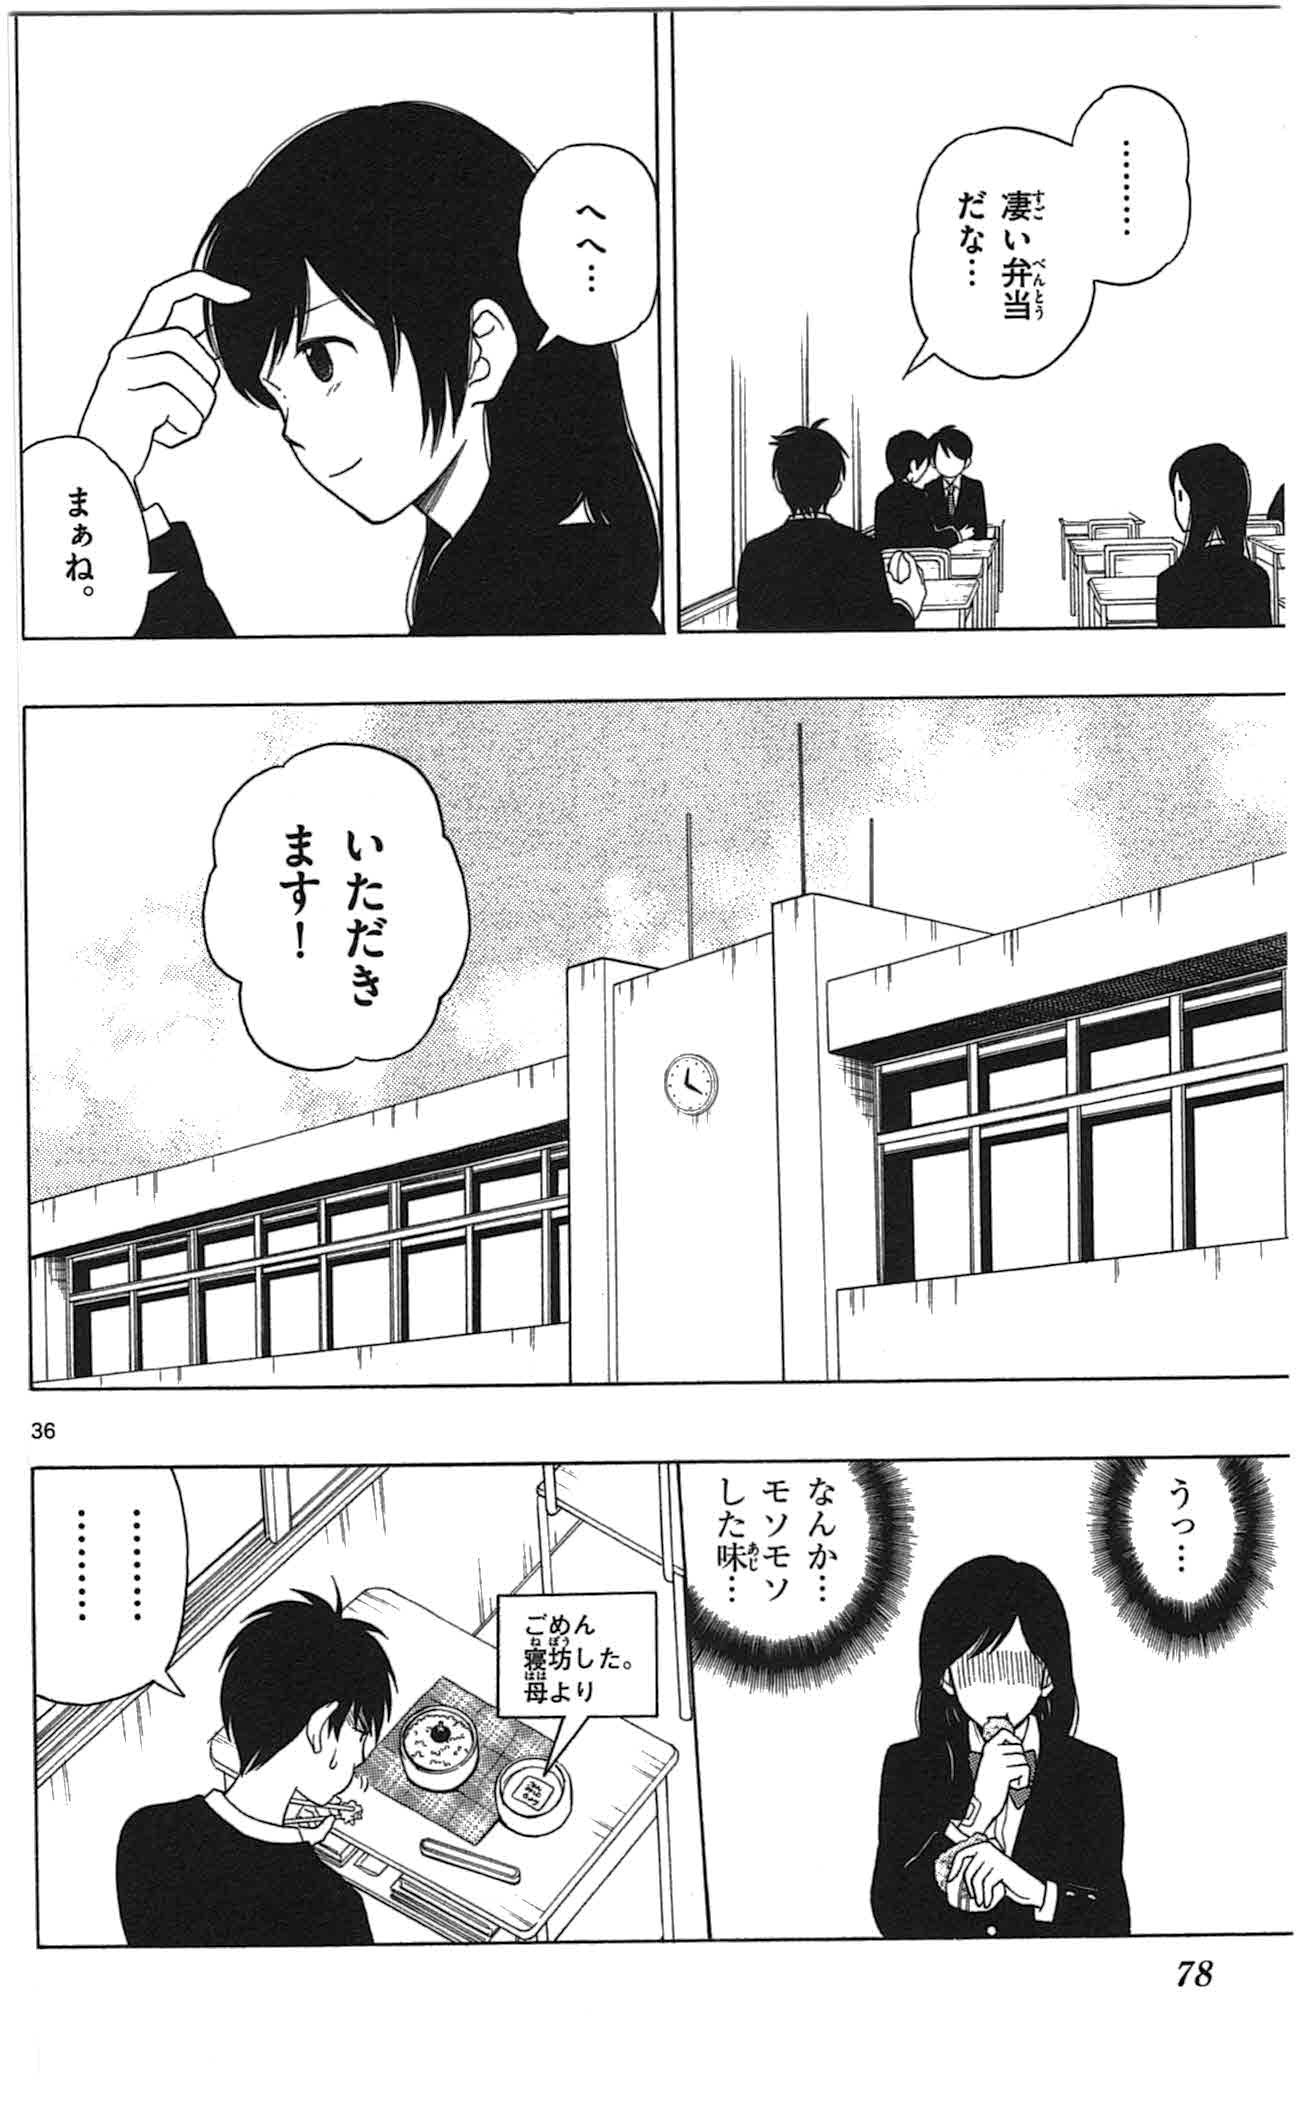 Yugami-kun ni wa Tomodachi ga Inai - Chapter 002 - Page 36